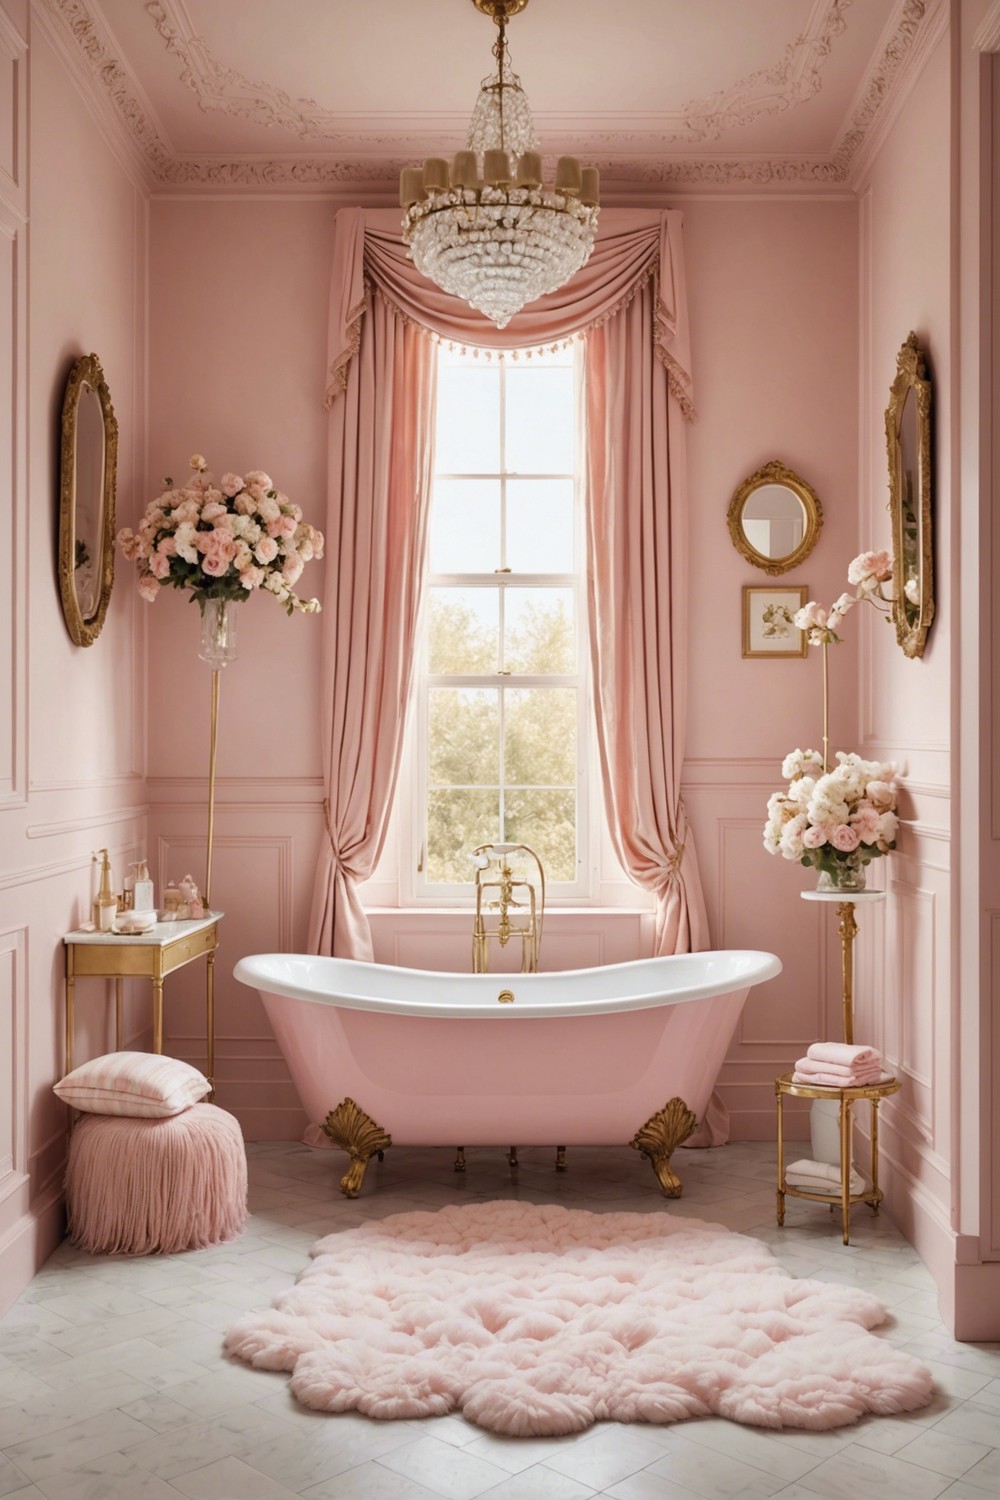 Cotton Candy Dreams: Soft Pink Bathroom Walls